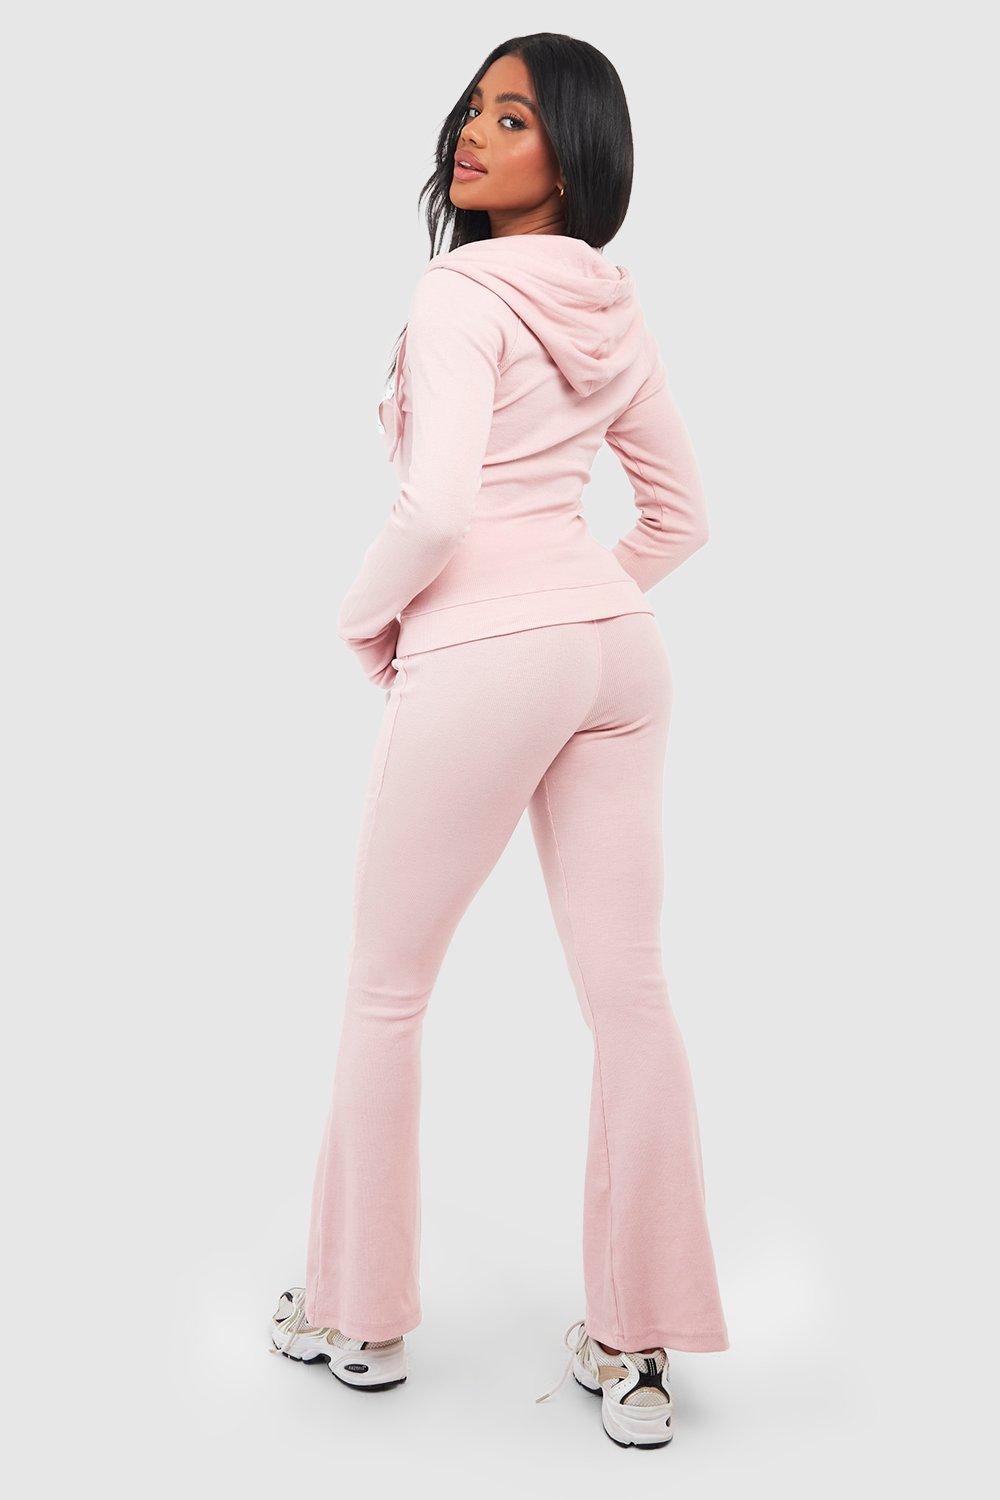 Dsgn Studio Ribbed Woven Label Flare Yoga Pants